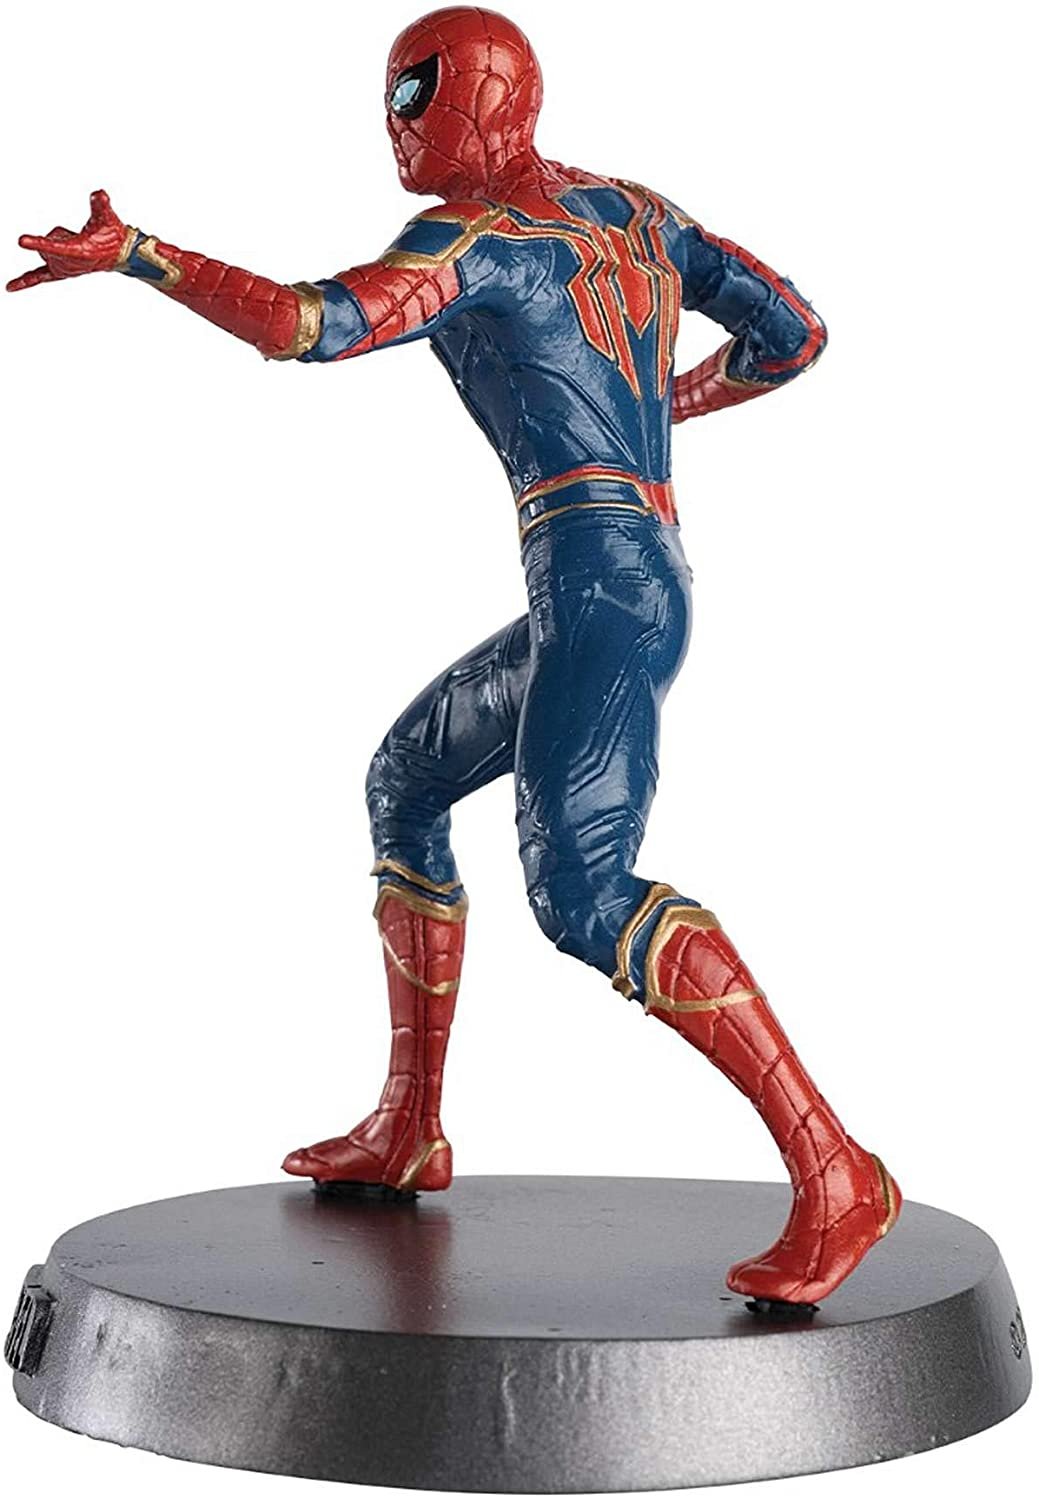 HERO COLLECTOR MARVEL HEAVYWEIGHTS COLLECTION - Iron Spider HEAVYWEIGHT METAL FIGURINE